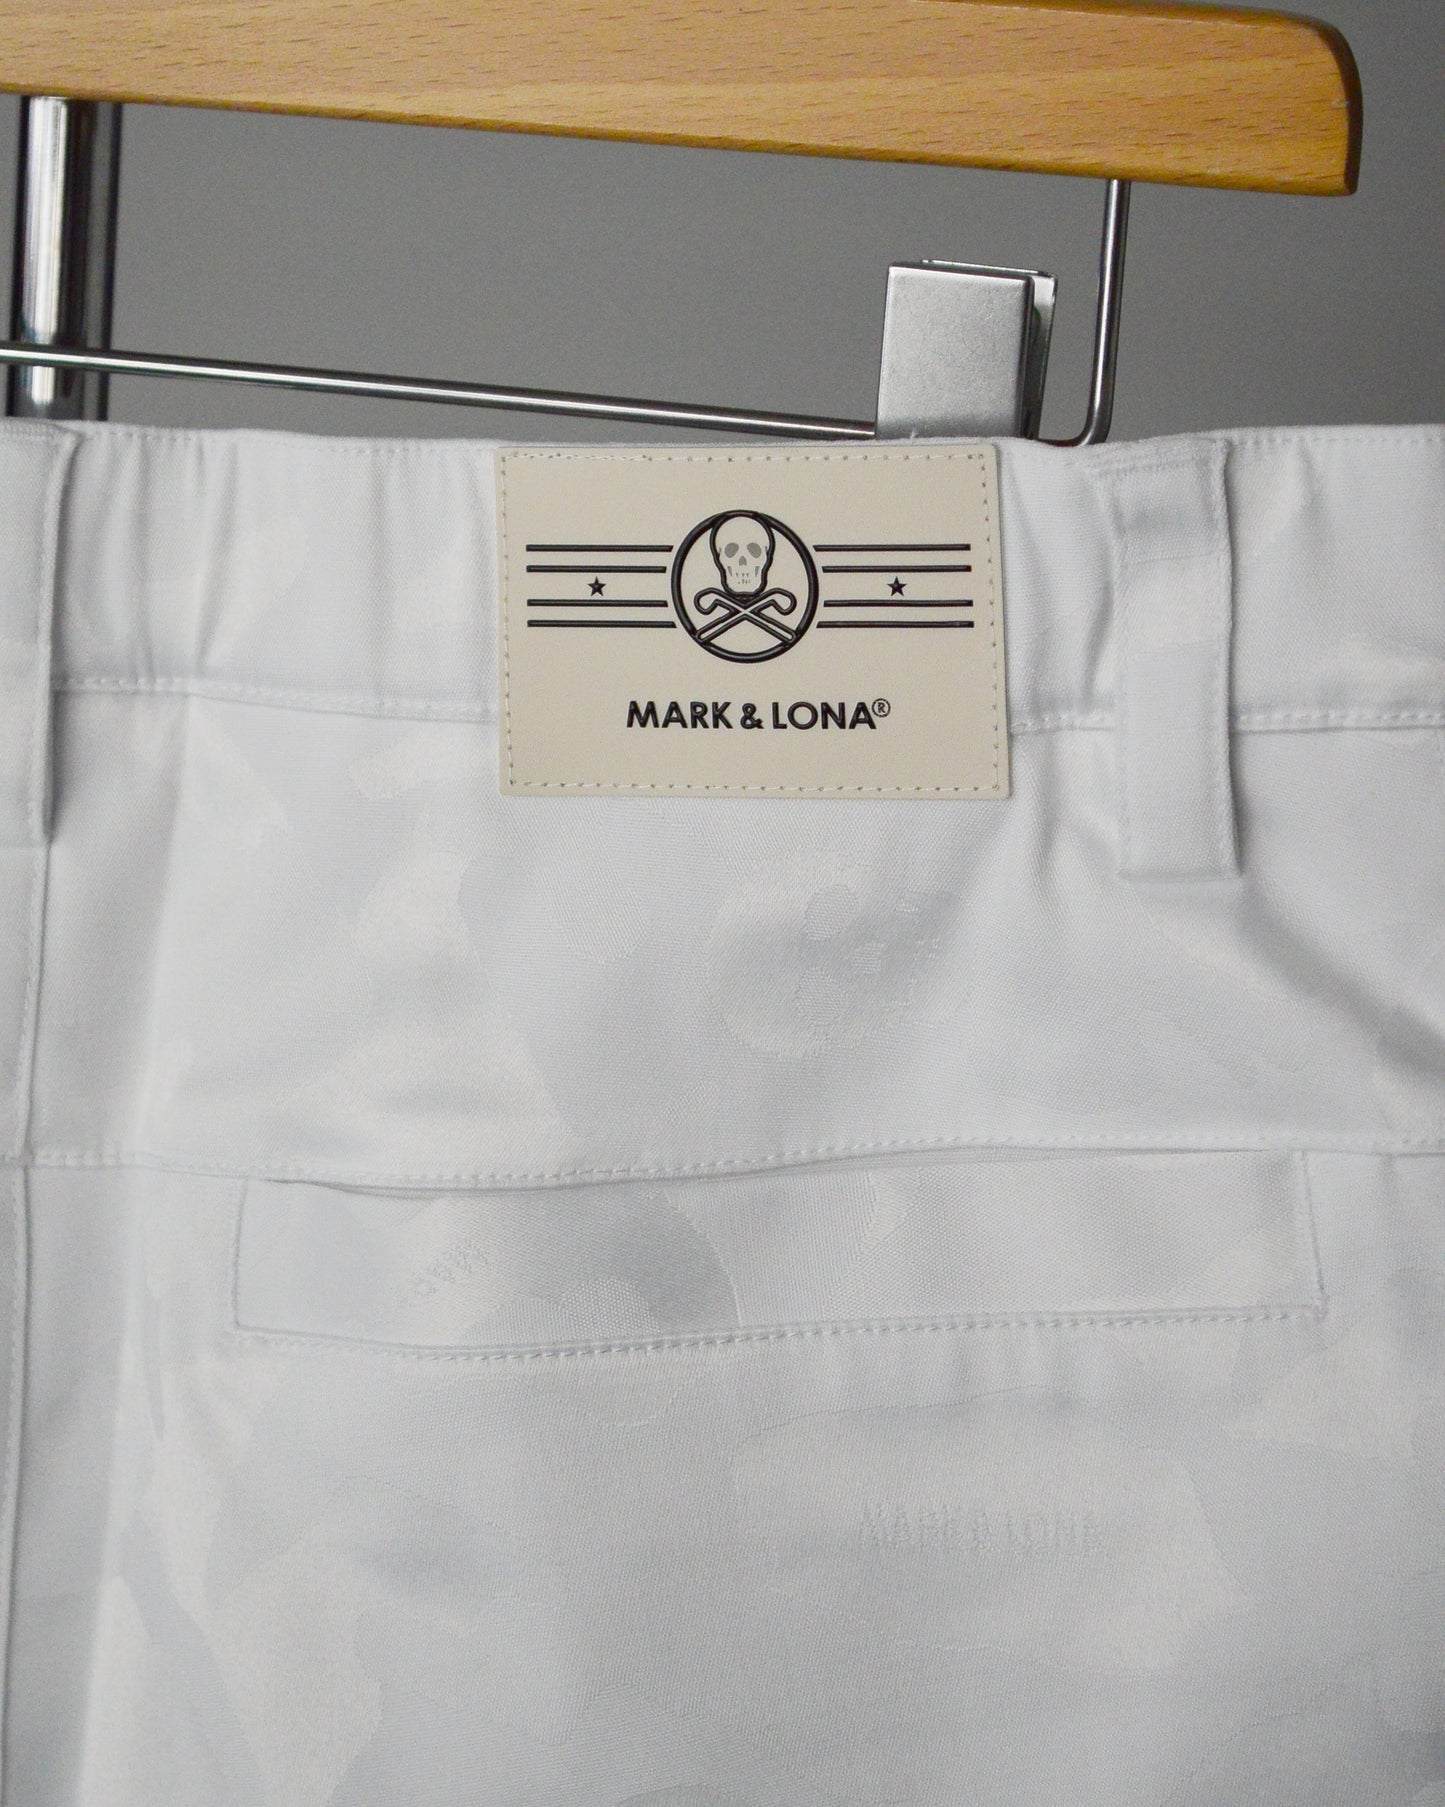 Gauge Mechanic Shorts | MEN WHITE